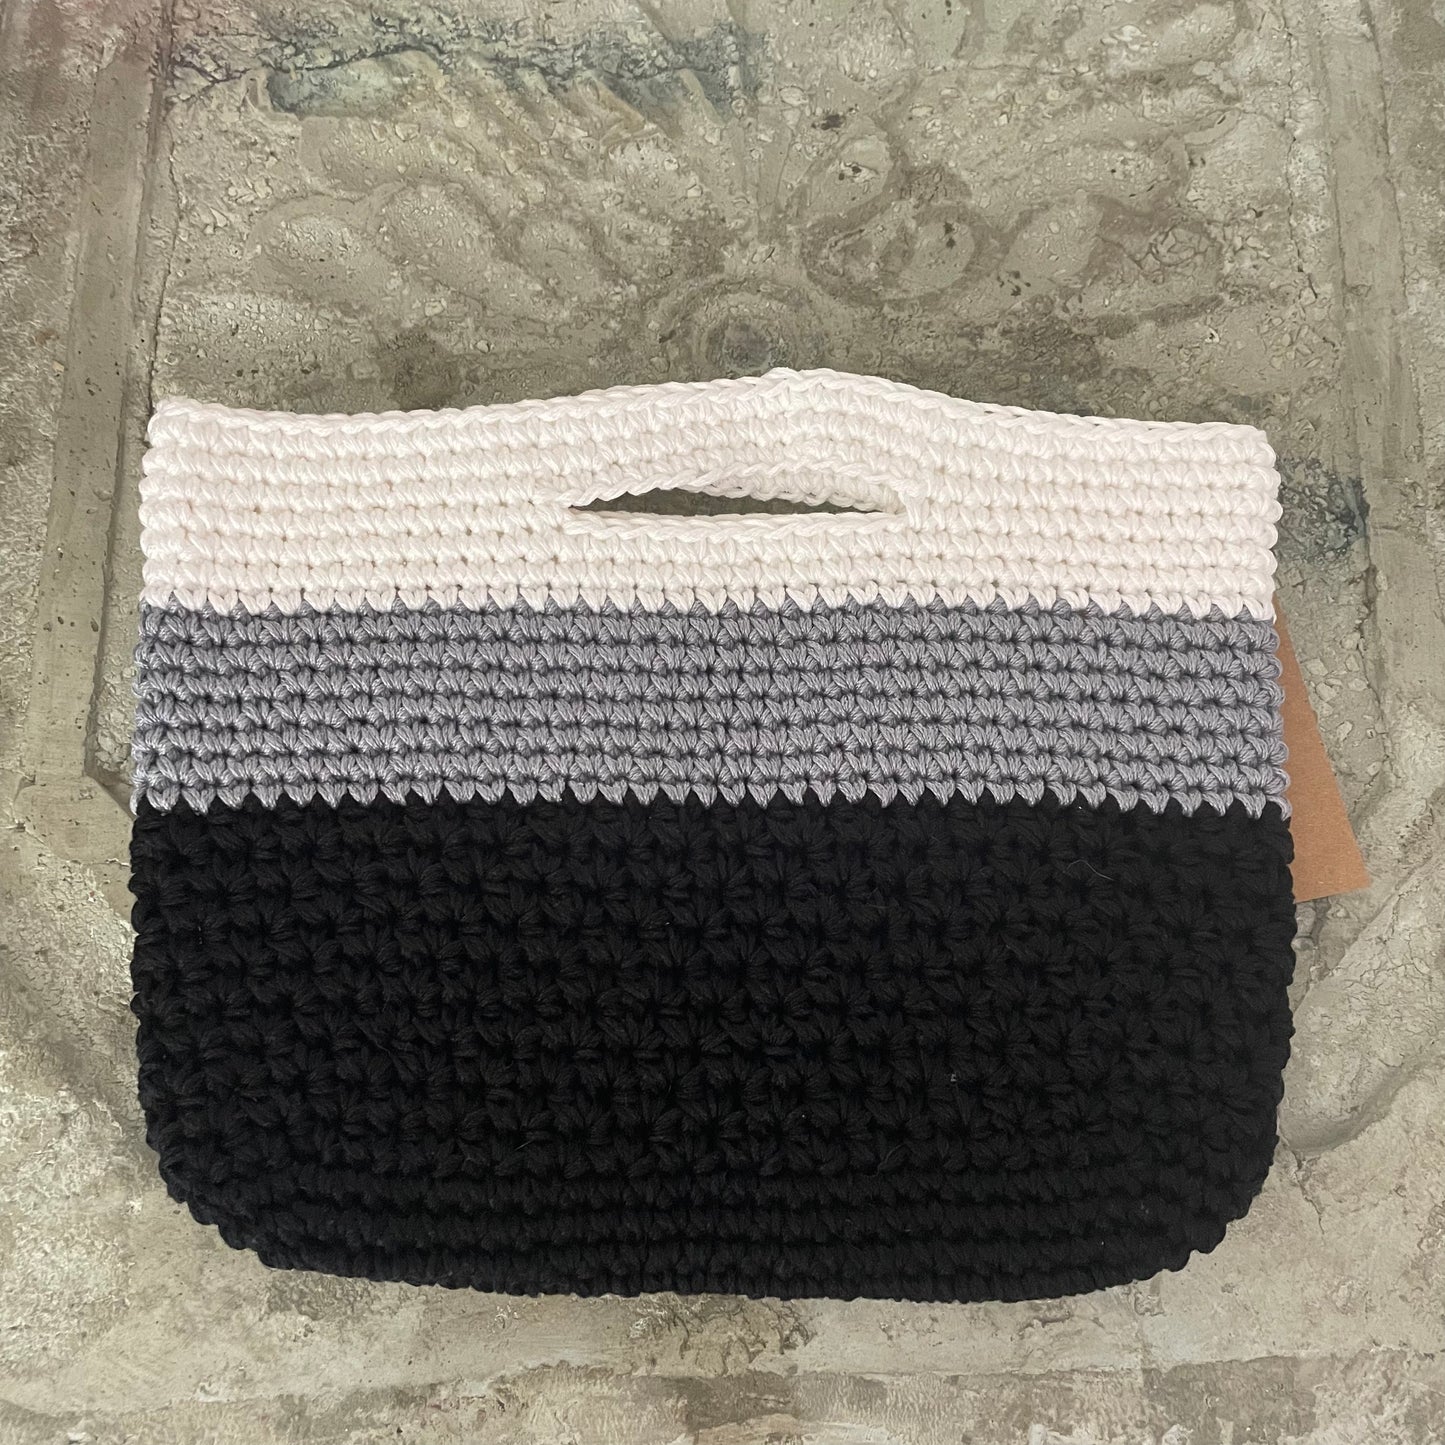 Colorblock Hand Crocheted Handled Purse Medium Knit Handbag Boho Minimalist Chic Cottagecore Black White Gray 100% Cotton